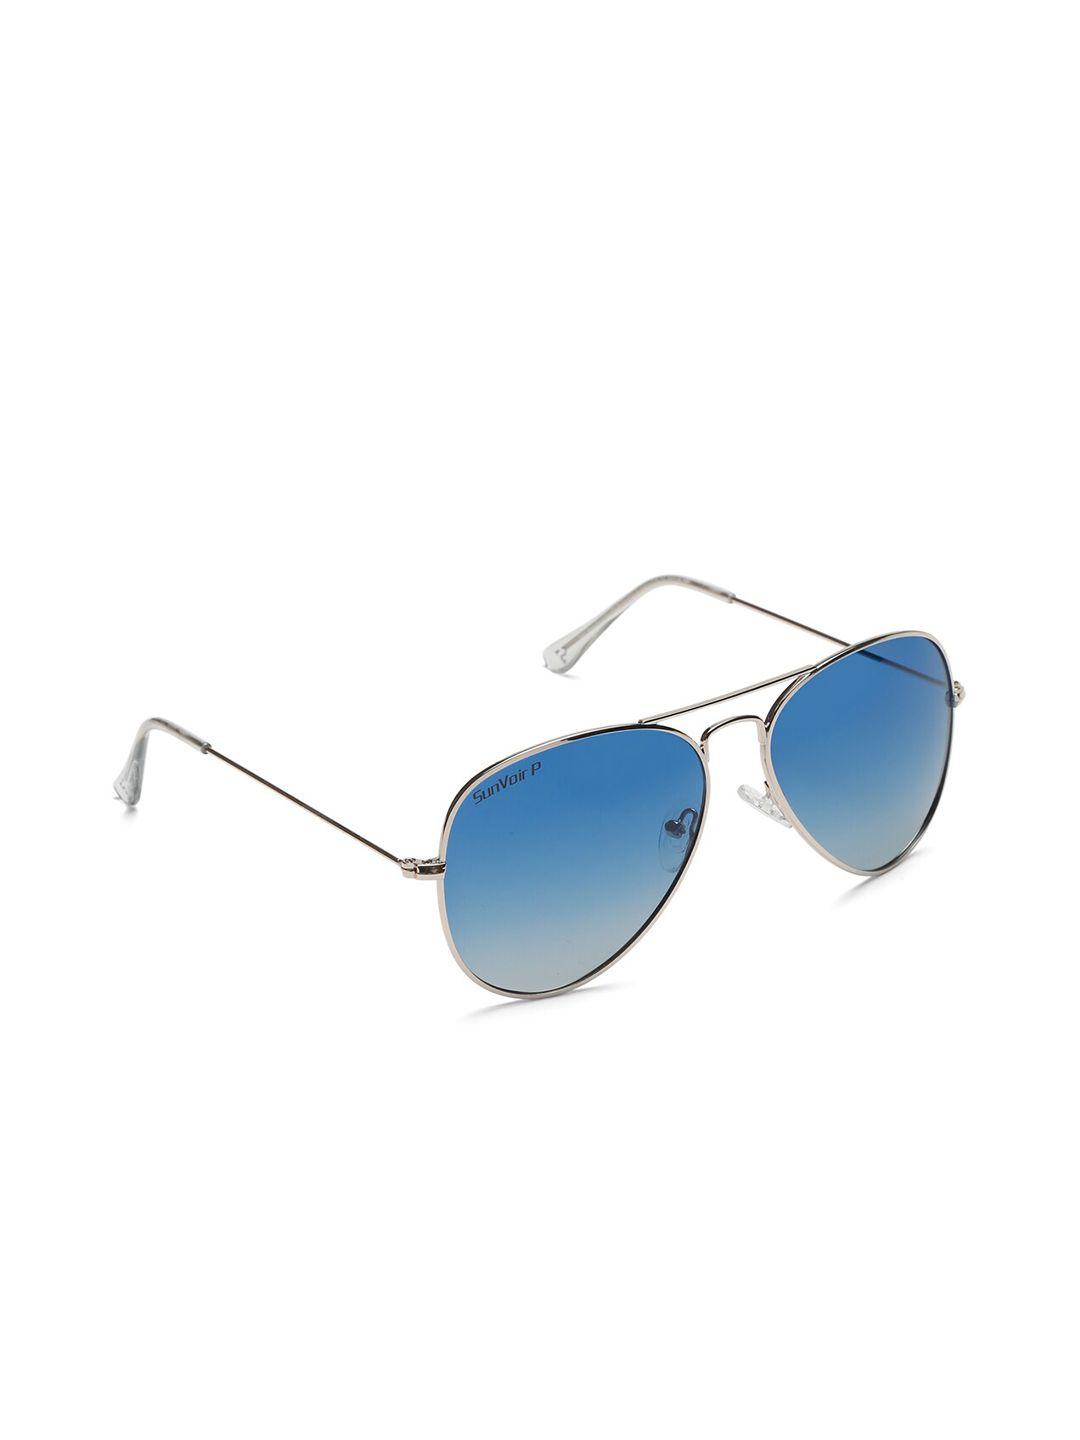 sunvoir unisex blue lens & silver-toned aviator sunglasses with polarised lens